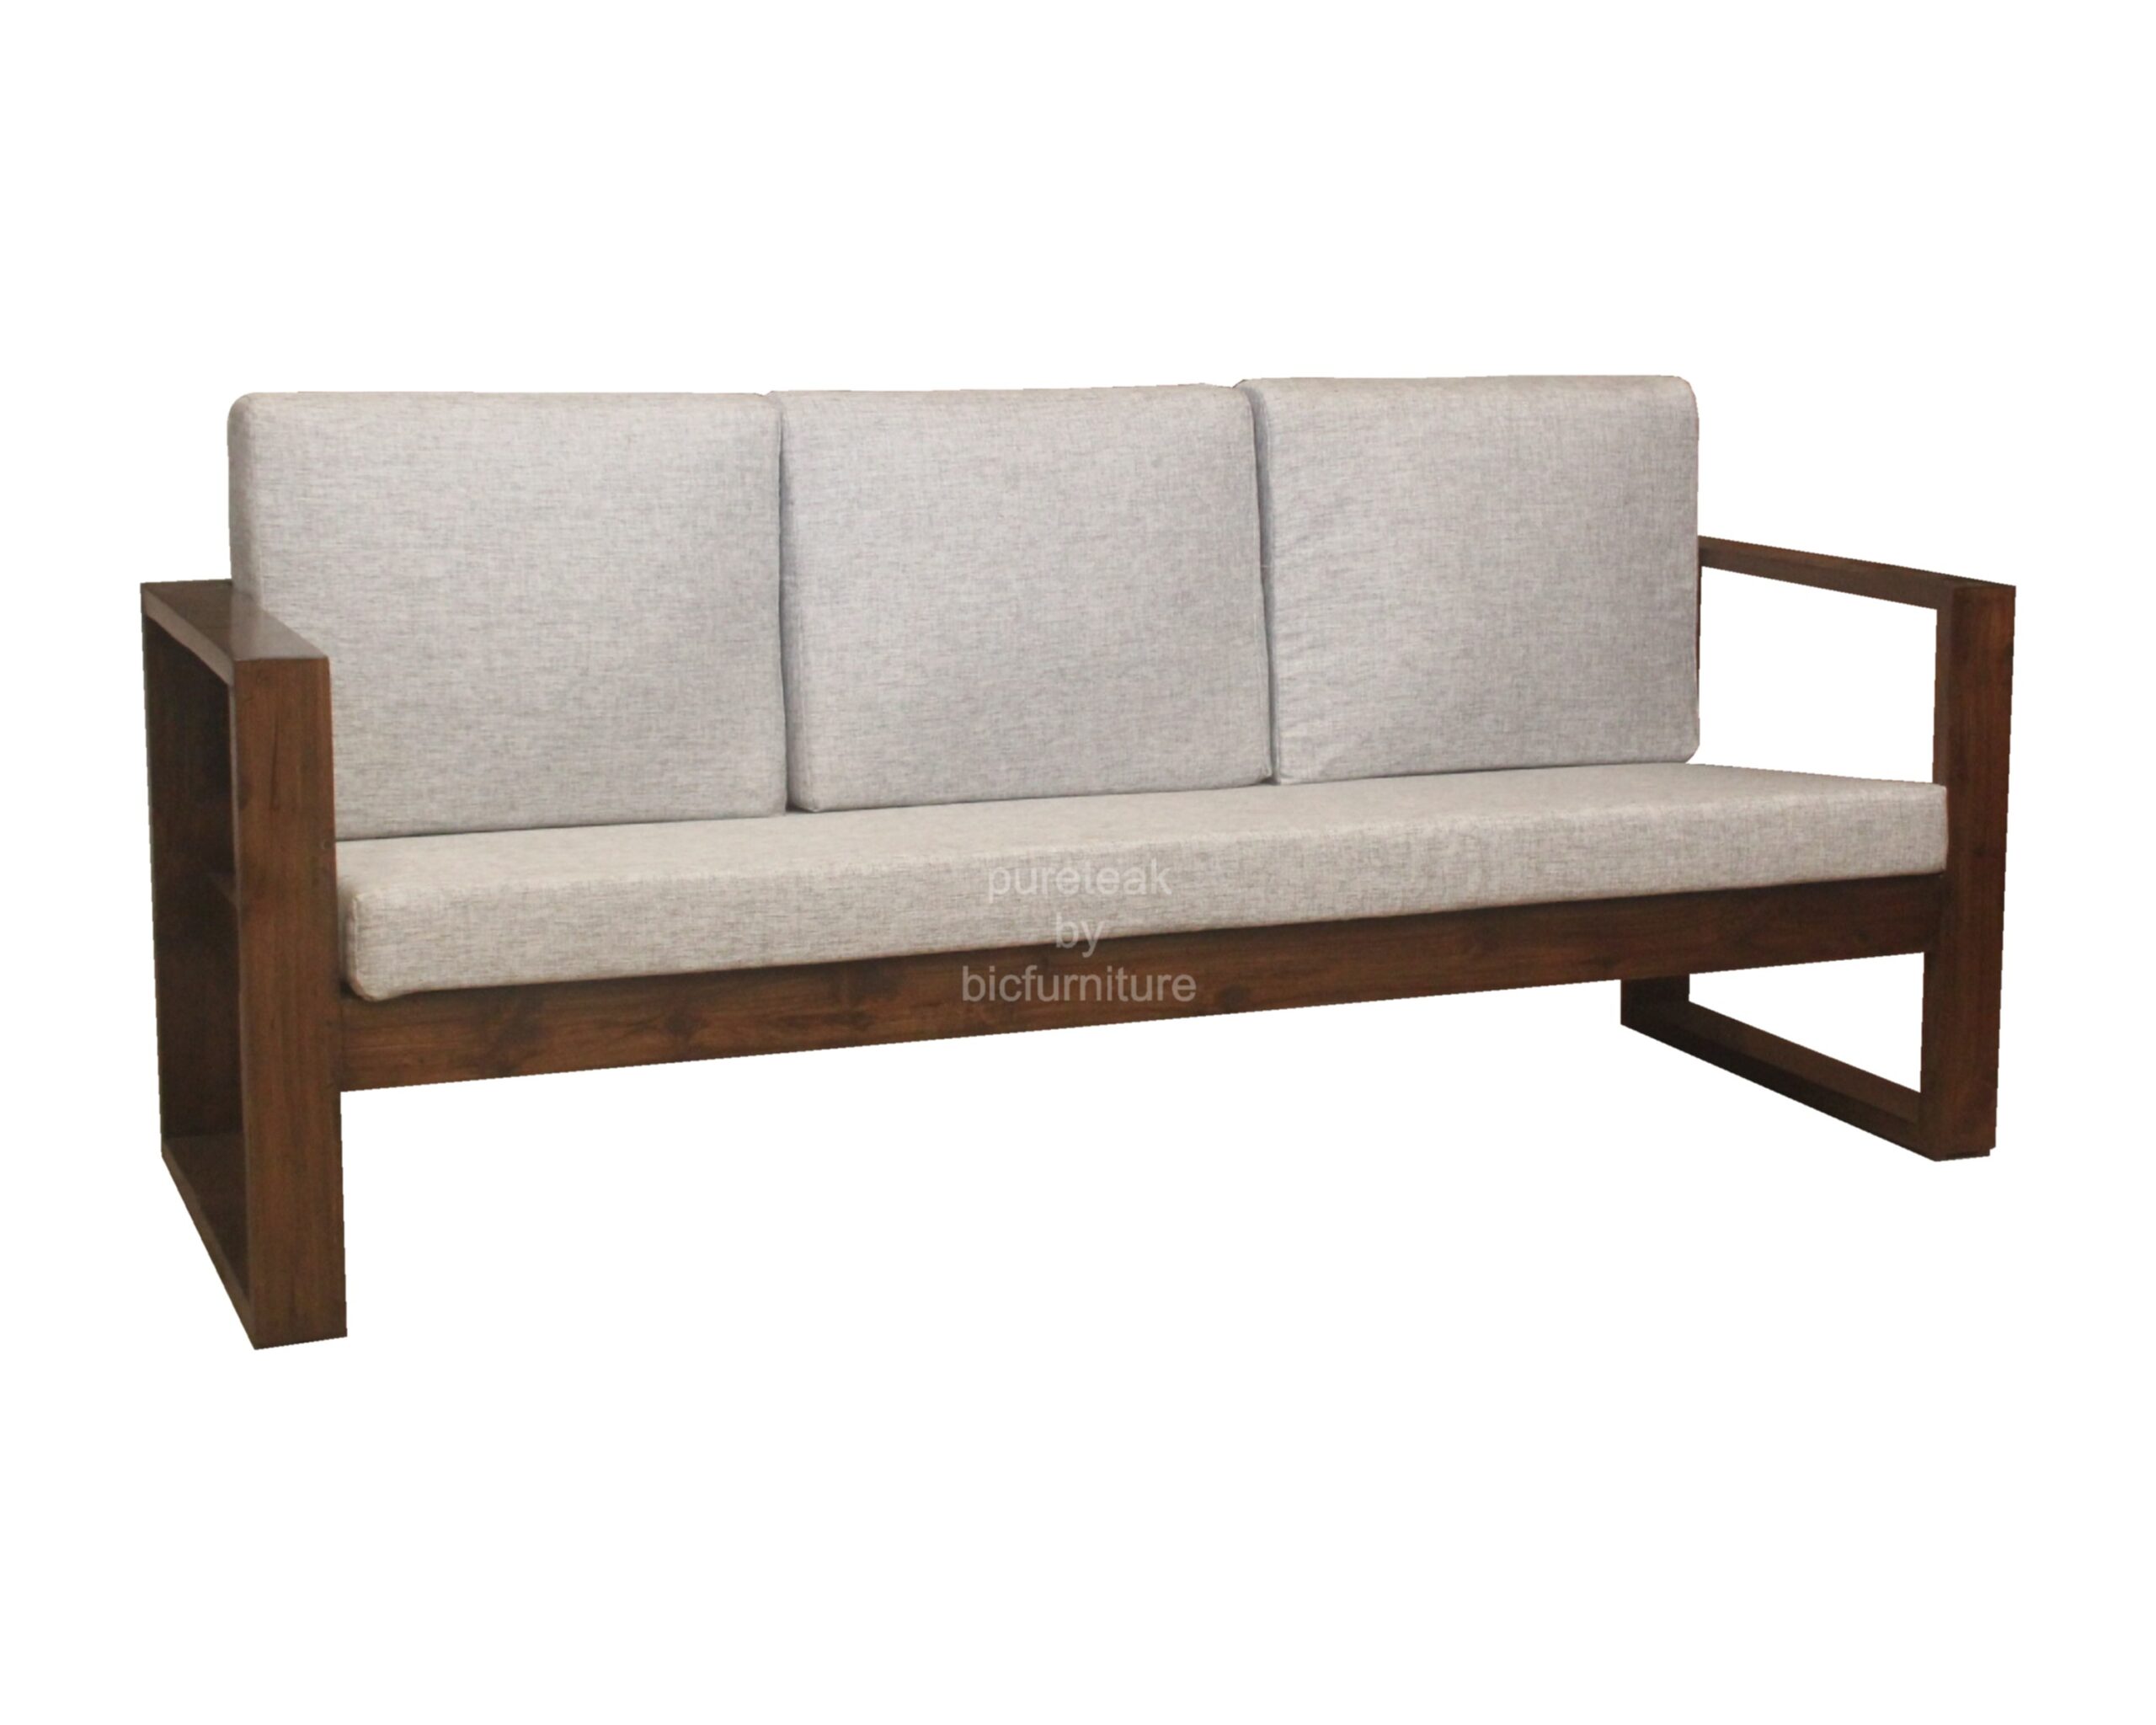 Wooden Sofa Set In Simple Design Ws 67